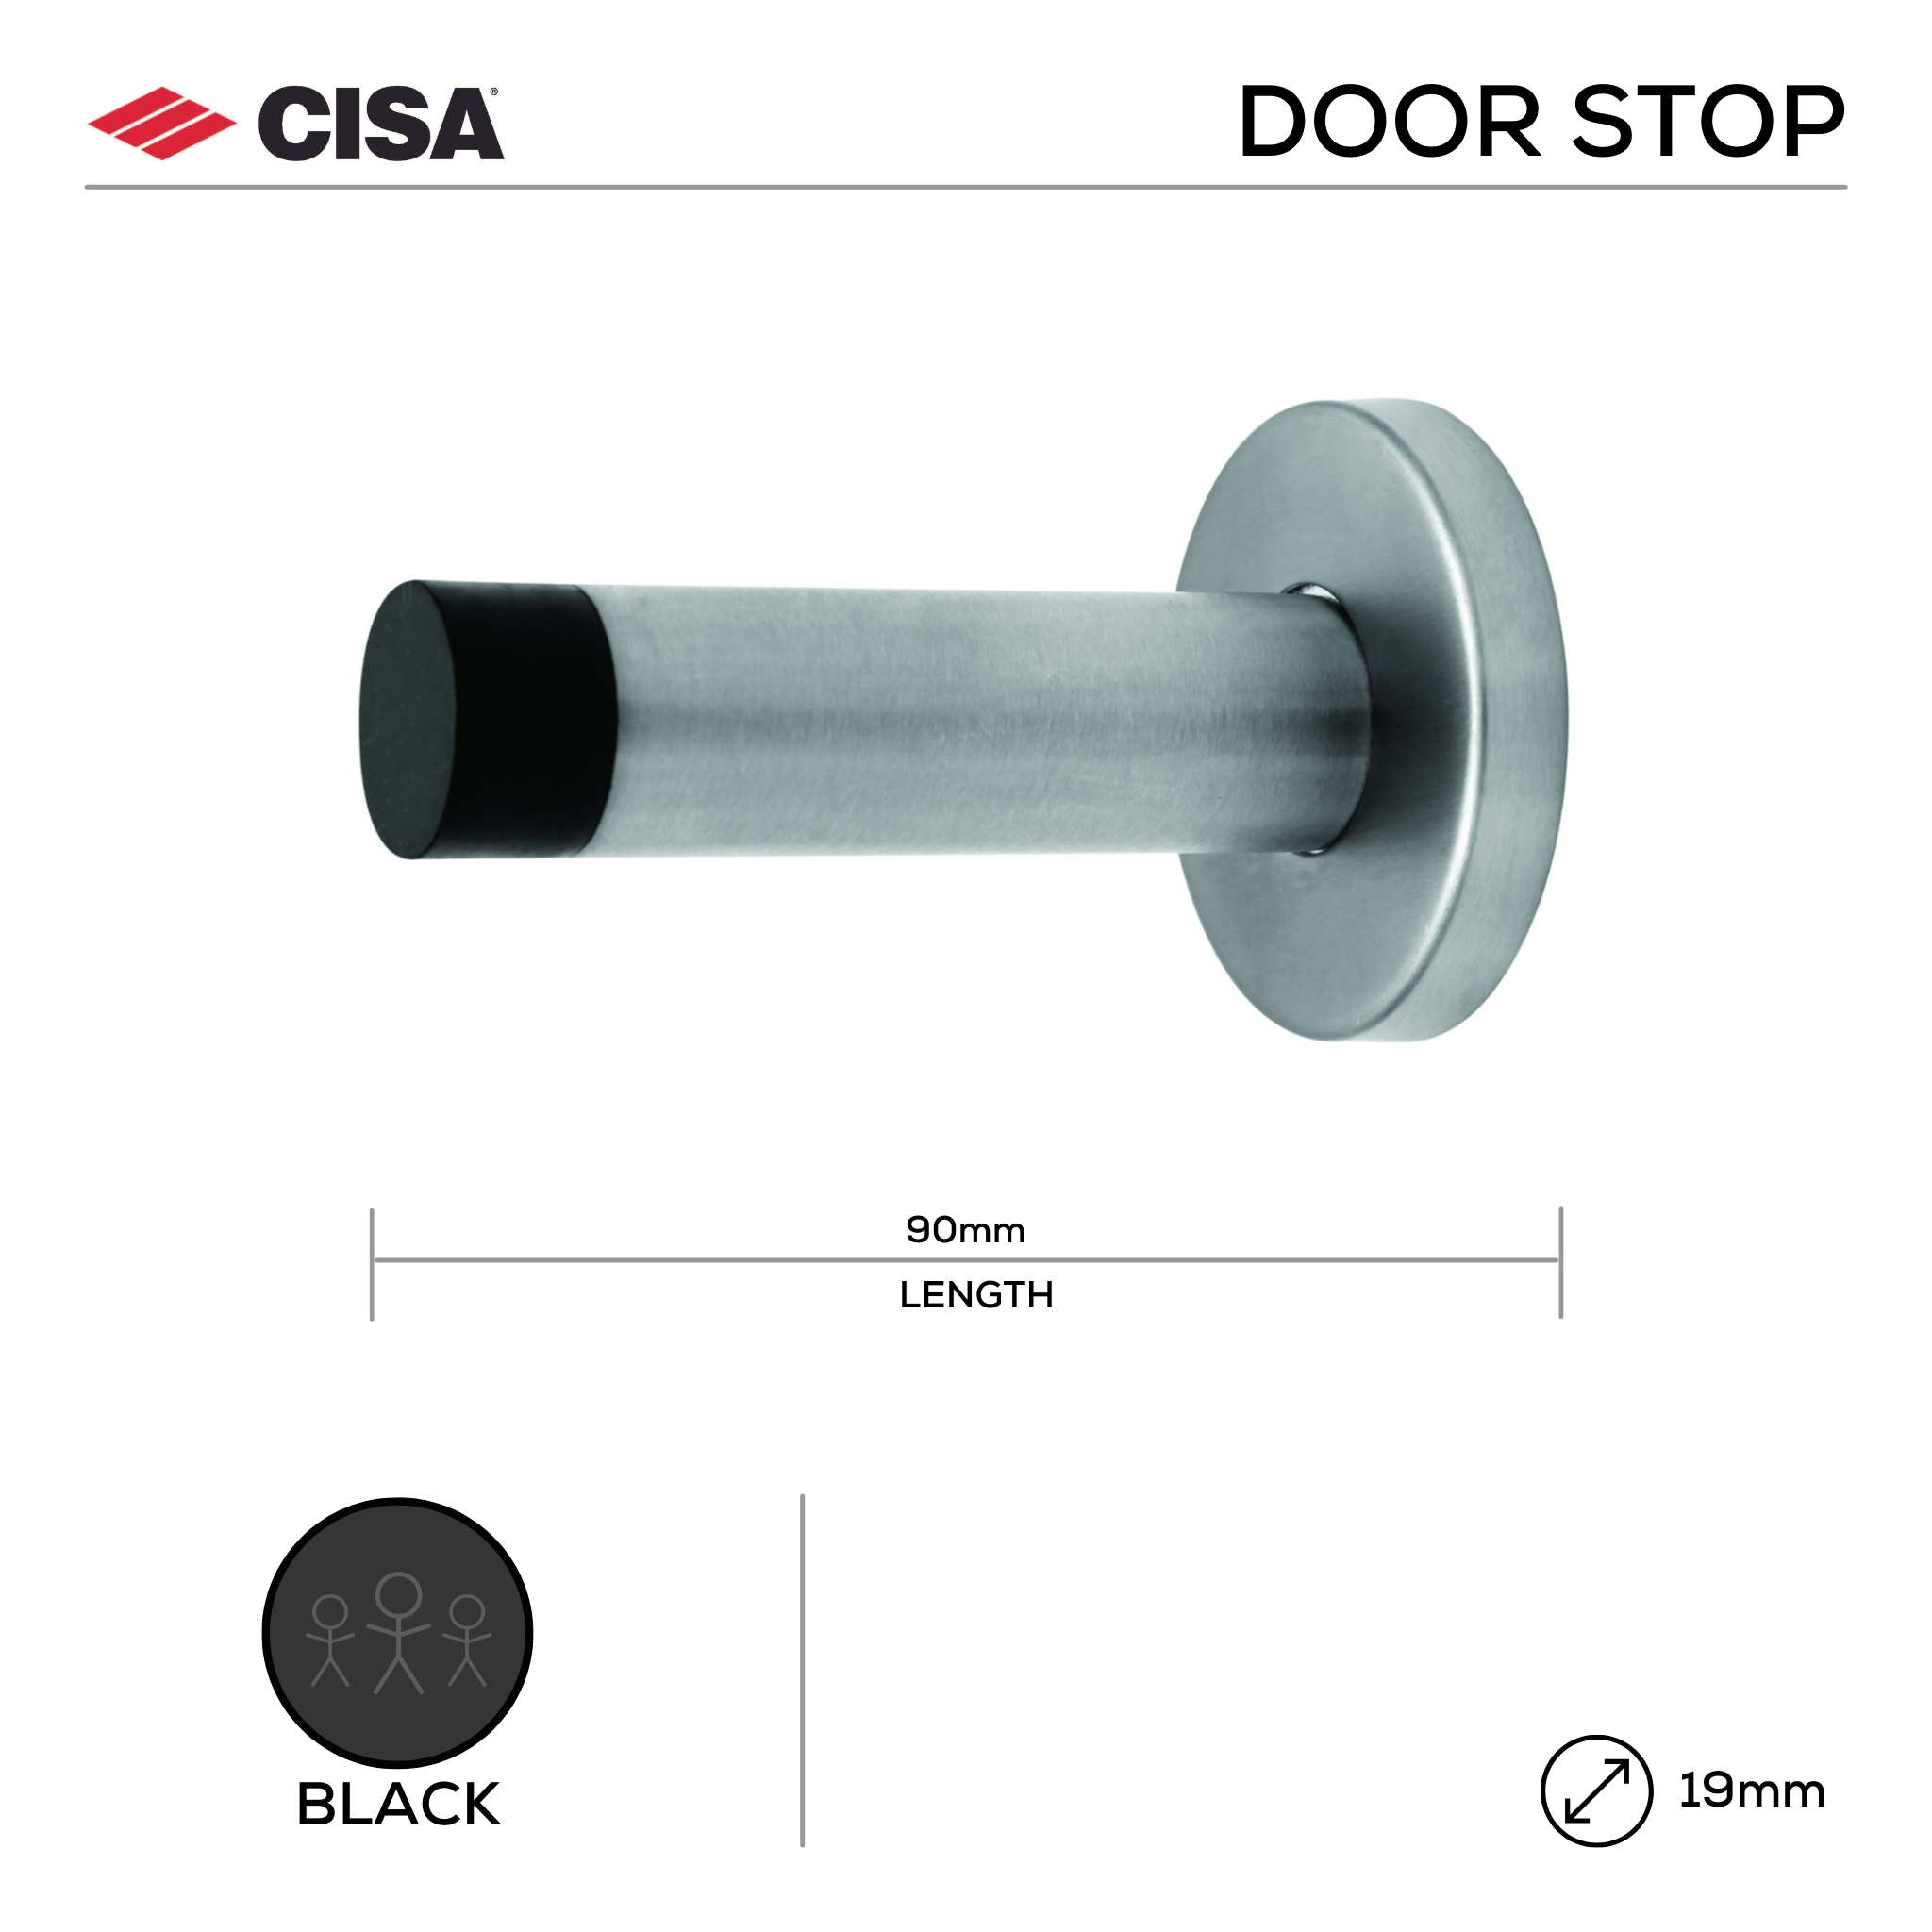 FDS02.BL, Door Stop, Wall Mounted, Round, 90mm (l) x 19mm (Ø), Black, CISA